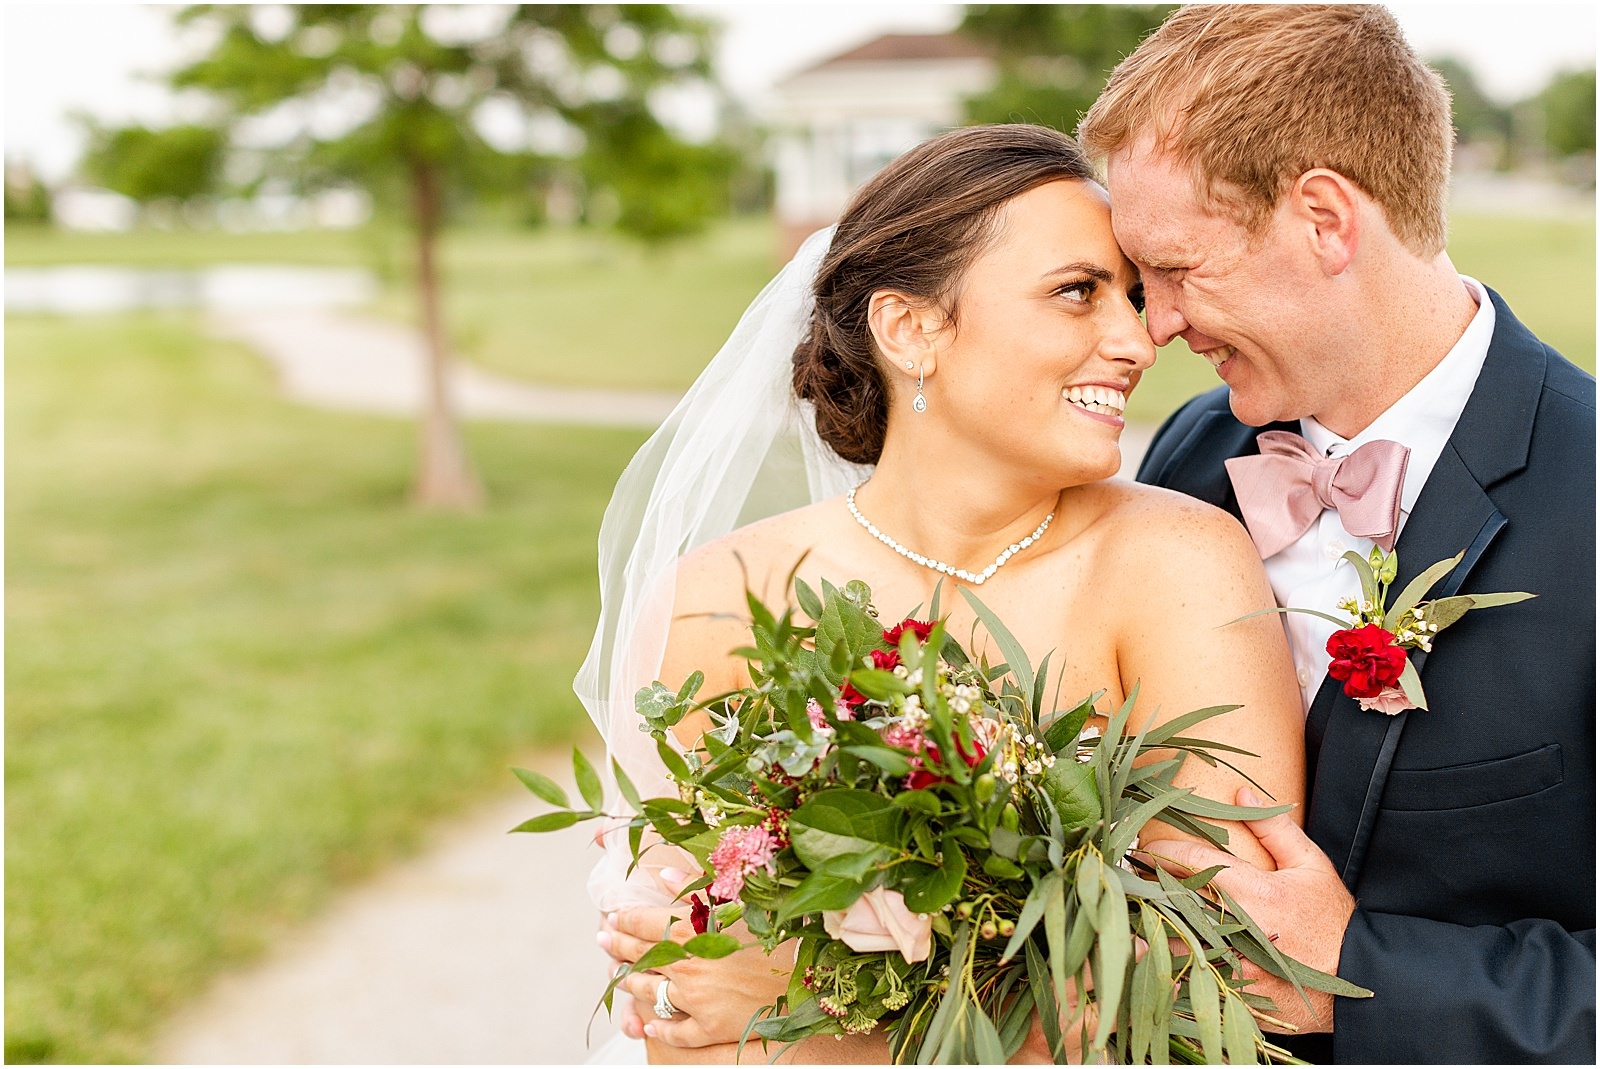 Deidra and Andrew | A Huntingburgh Indiana Wedding Bret and Brandie | Evansville Photographers | @bretandbrandie-0133.jpg